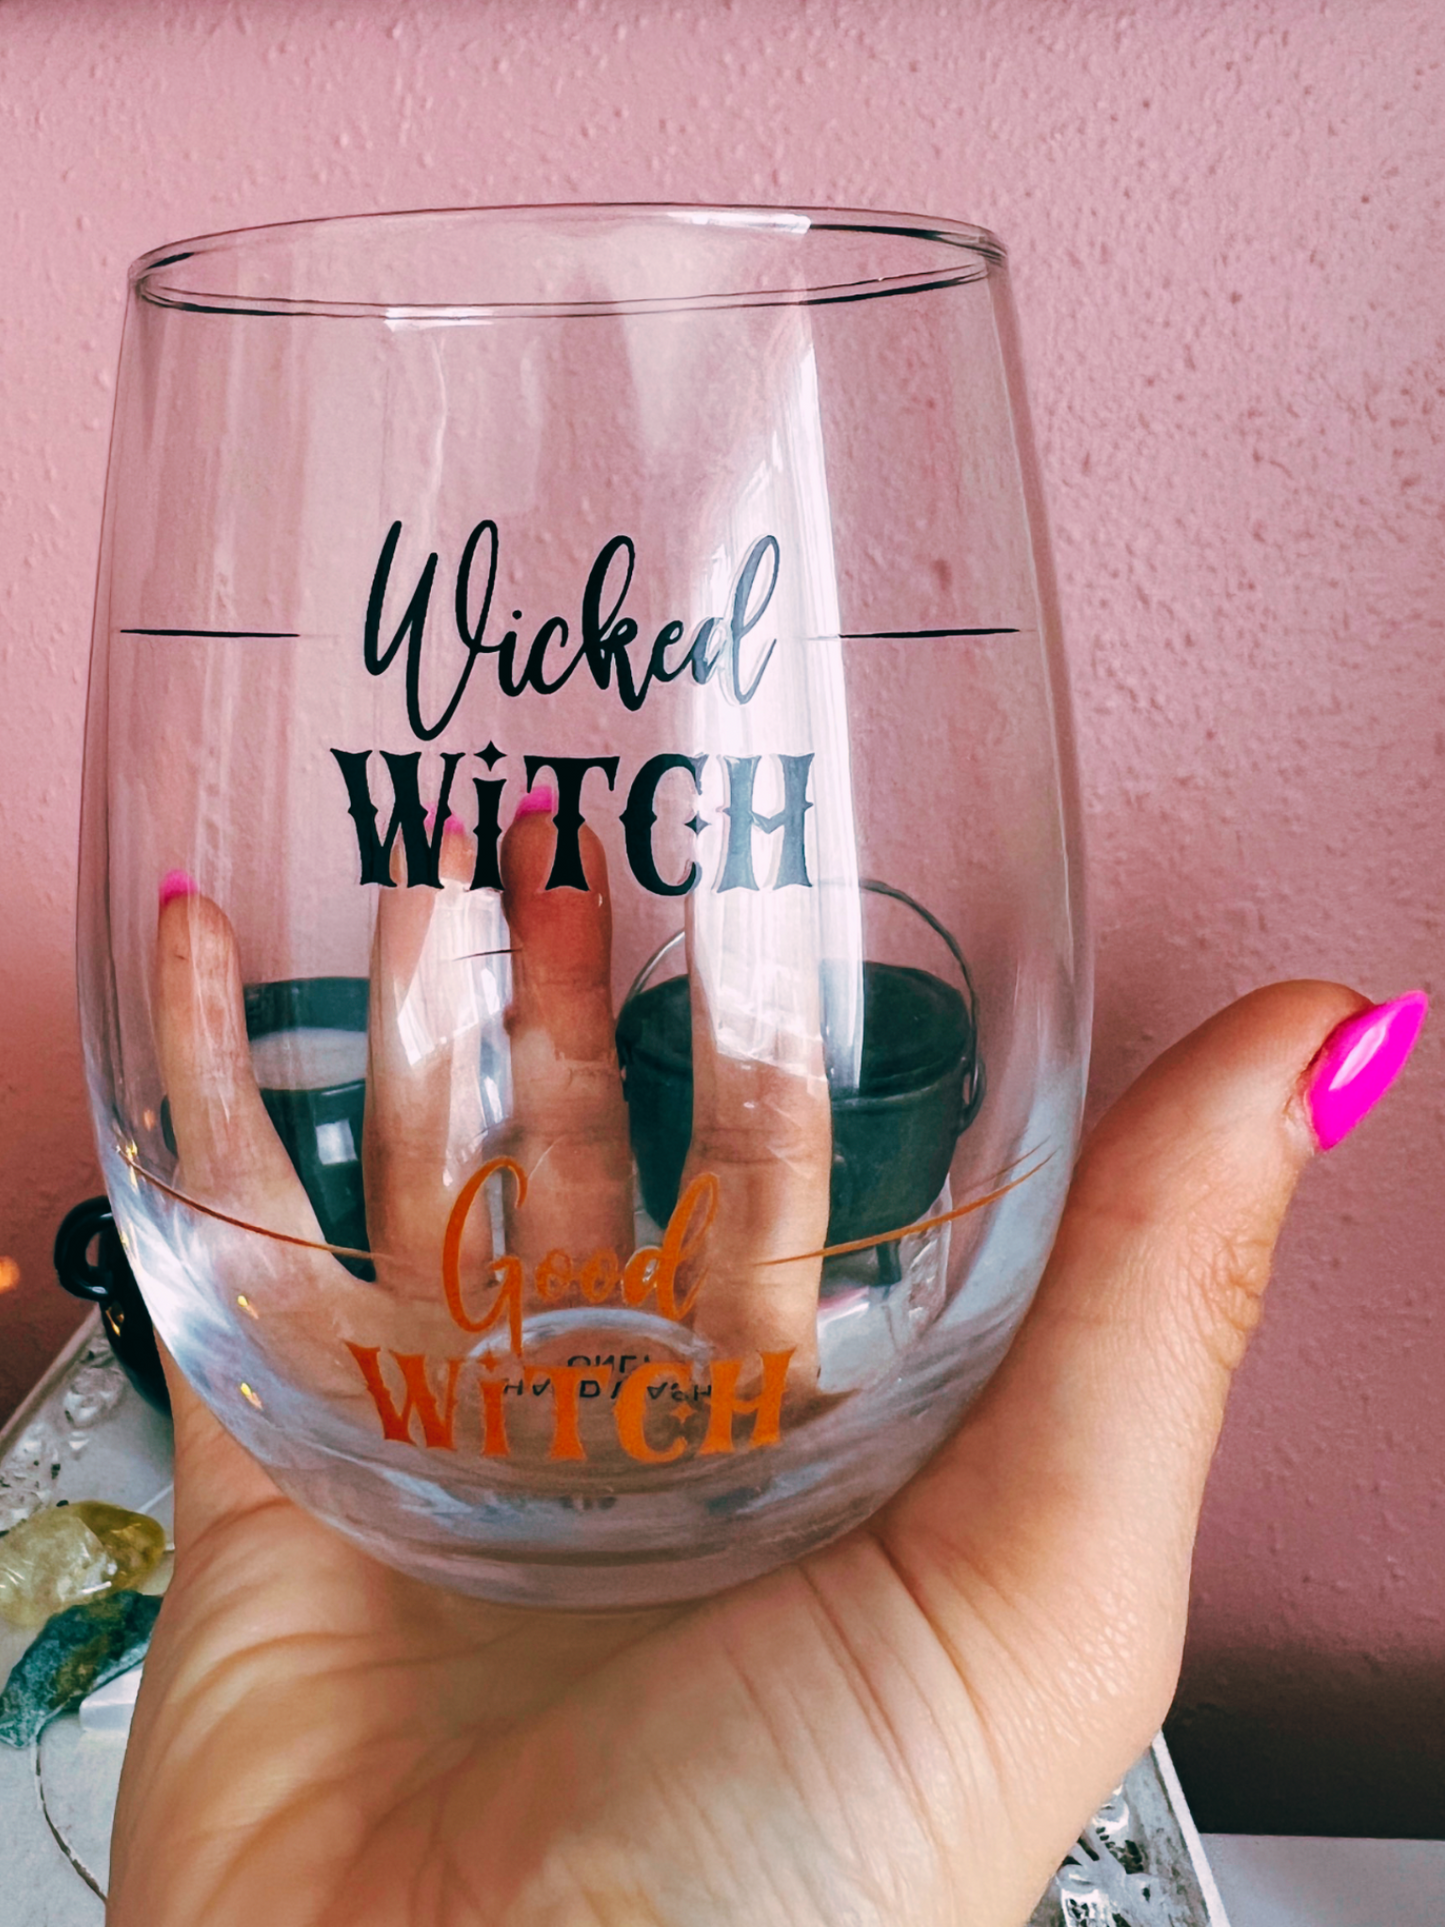 Good Witch/ Wicked witch